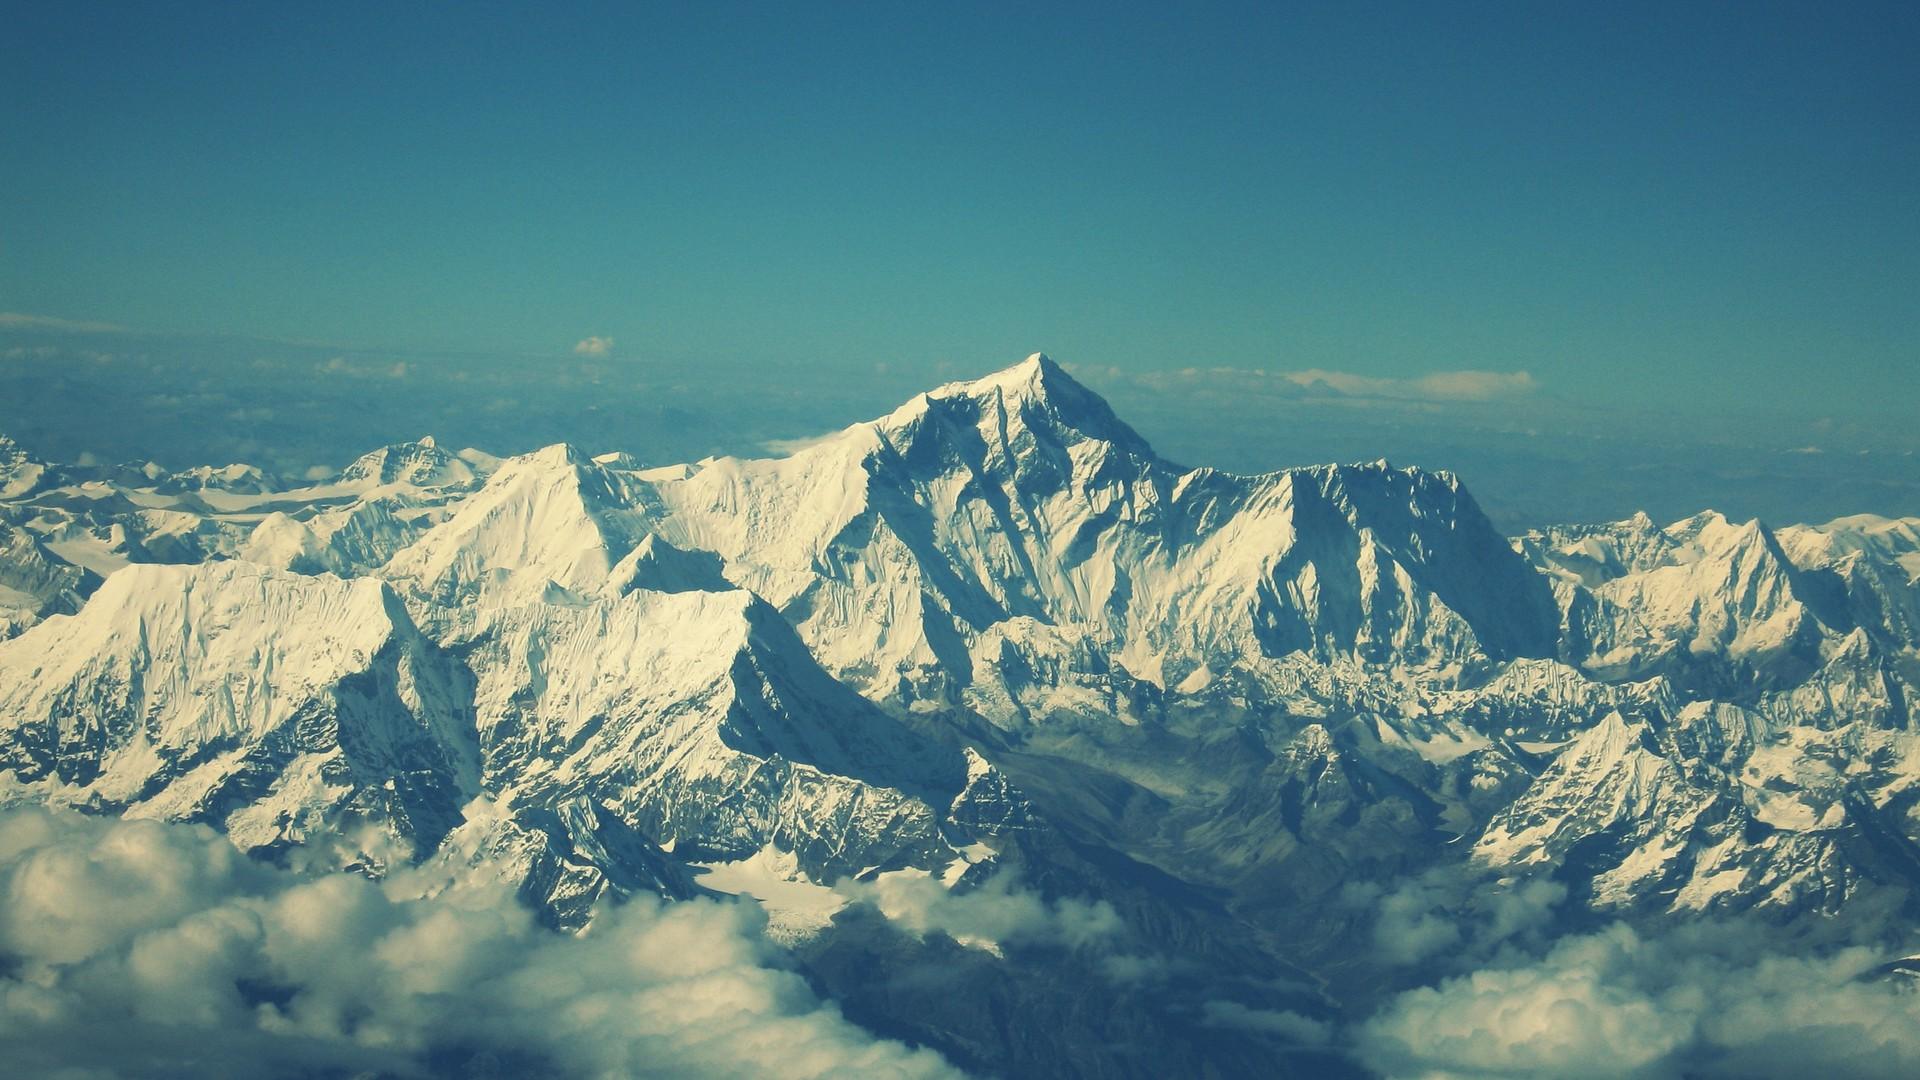 Mount Everest Wallpaper VW3 (1920x1080 px)